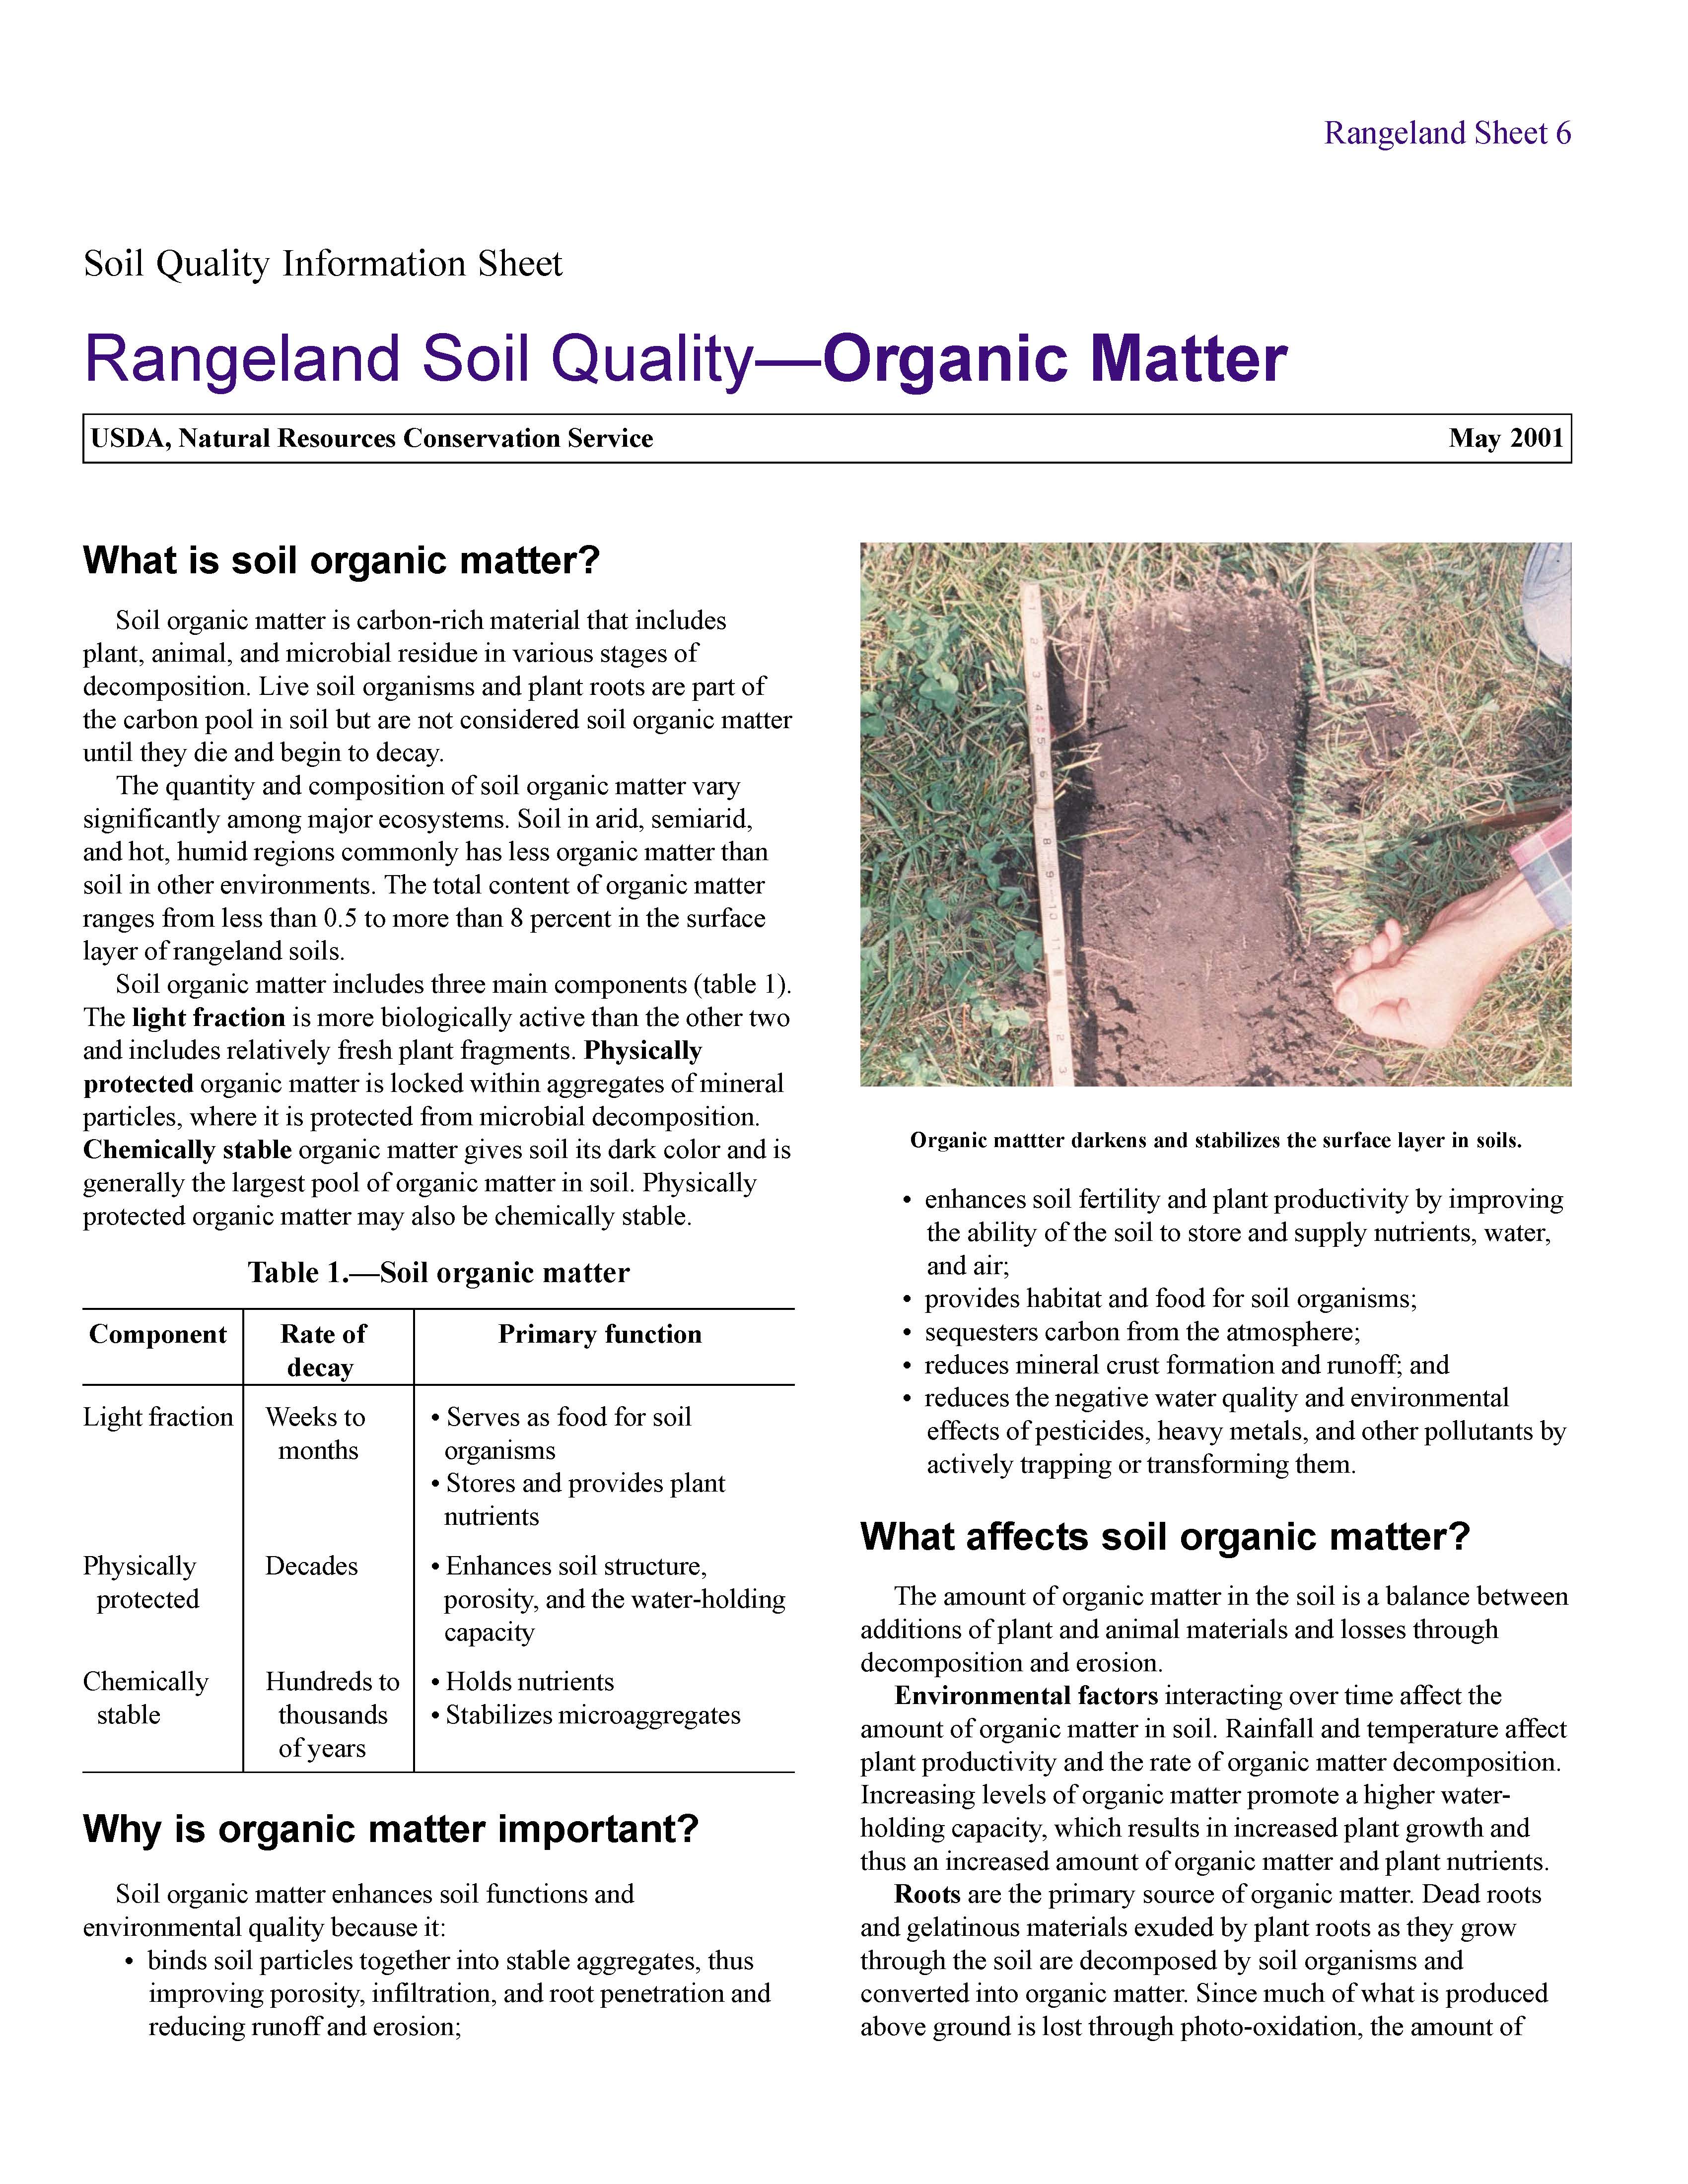 SQ-Rangeland Soil Quality-Organic Matter